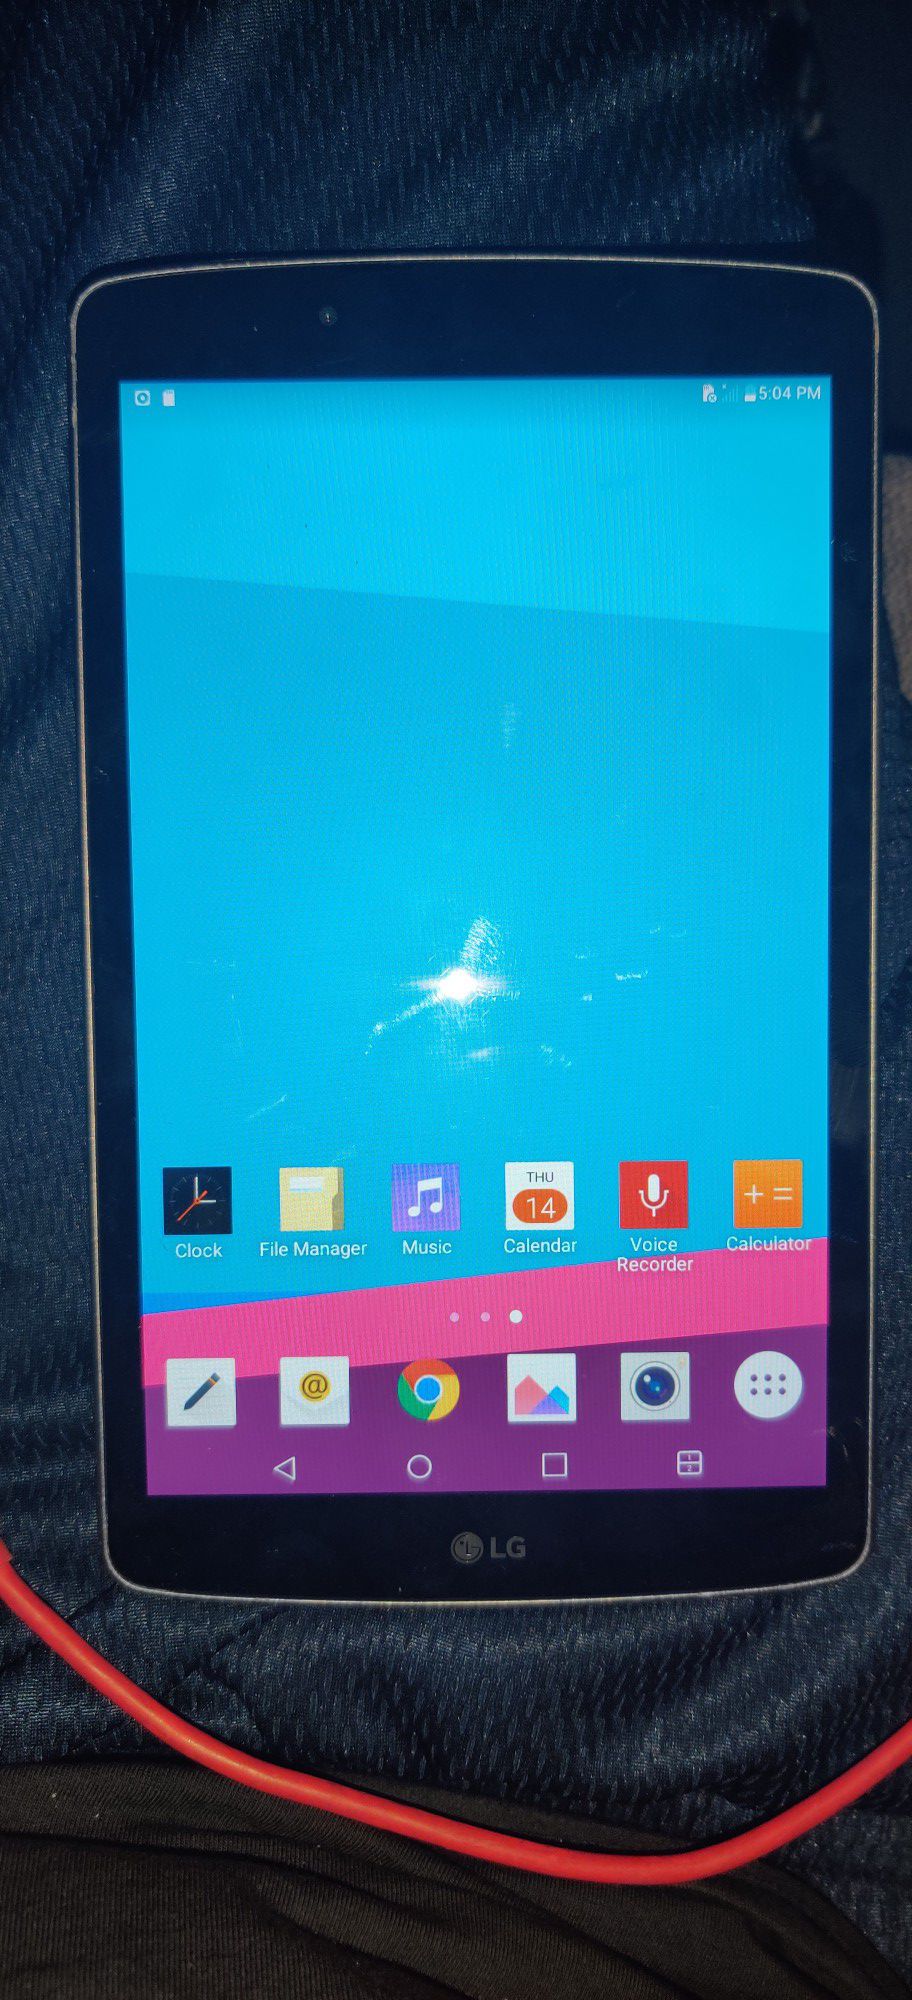 LG G Pad f 8.0 tablet